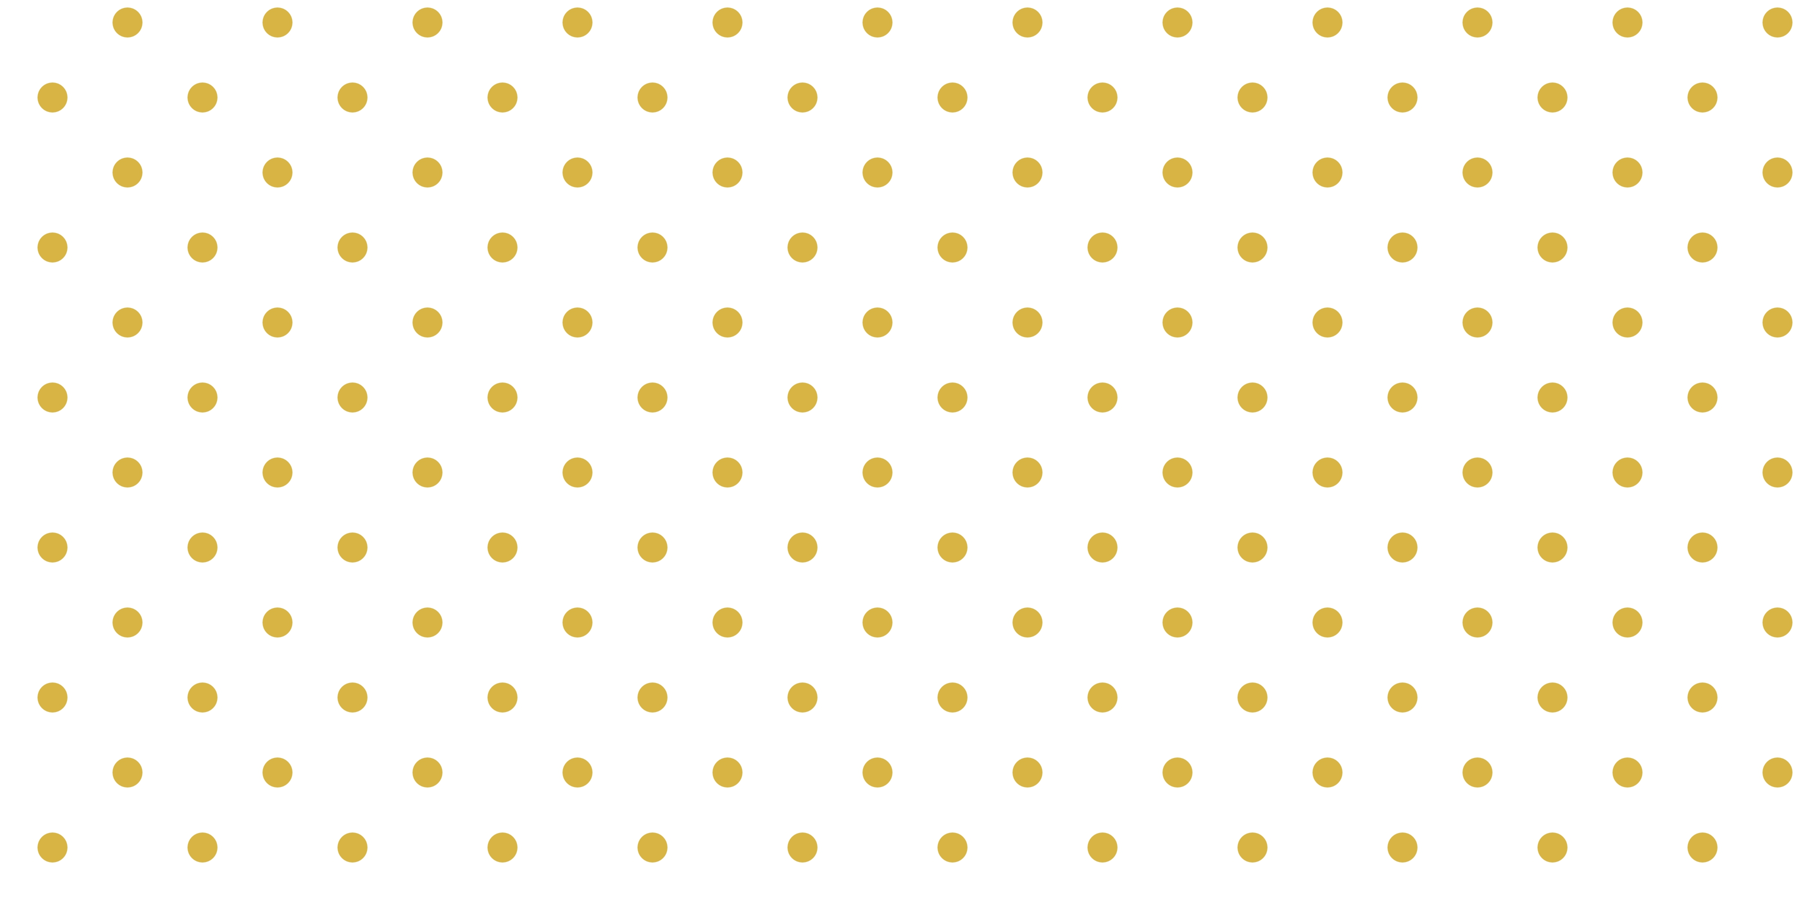 Gold Polka Dot Desktop Wallpaper Image Pictures Becuo